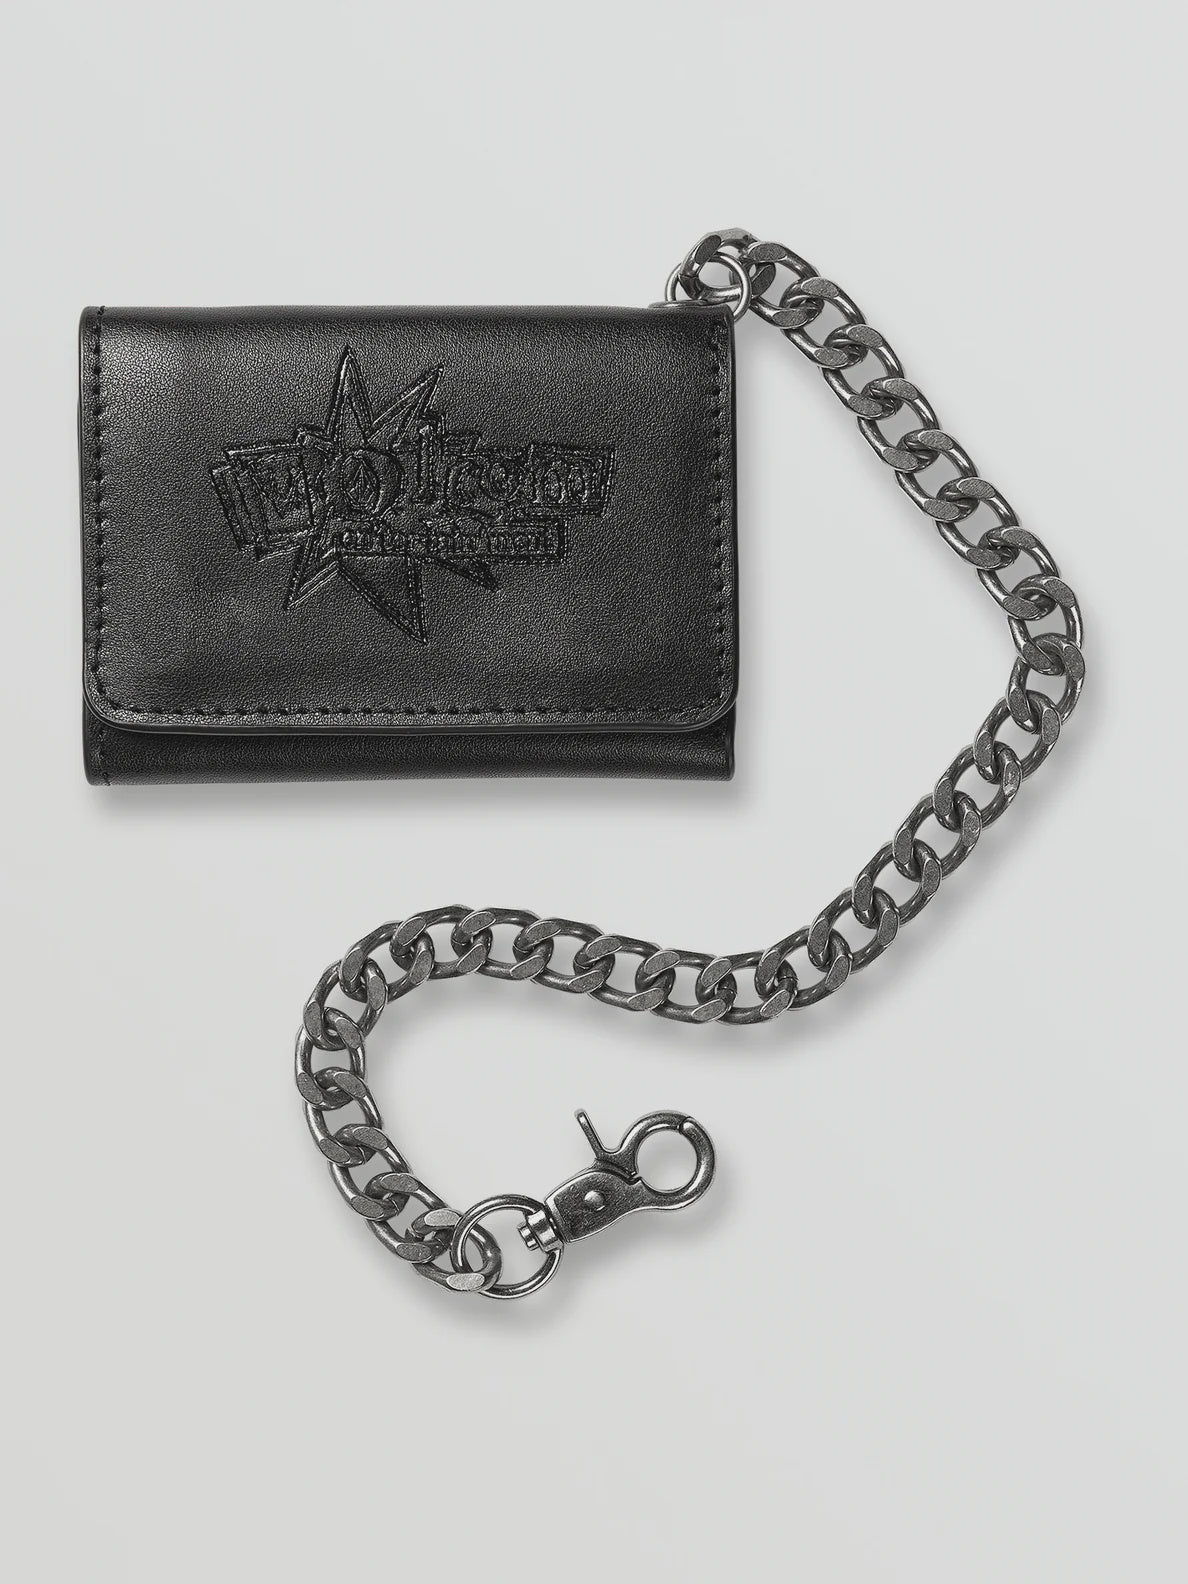 Volcom Entertinment Leather Wallet